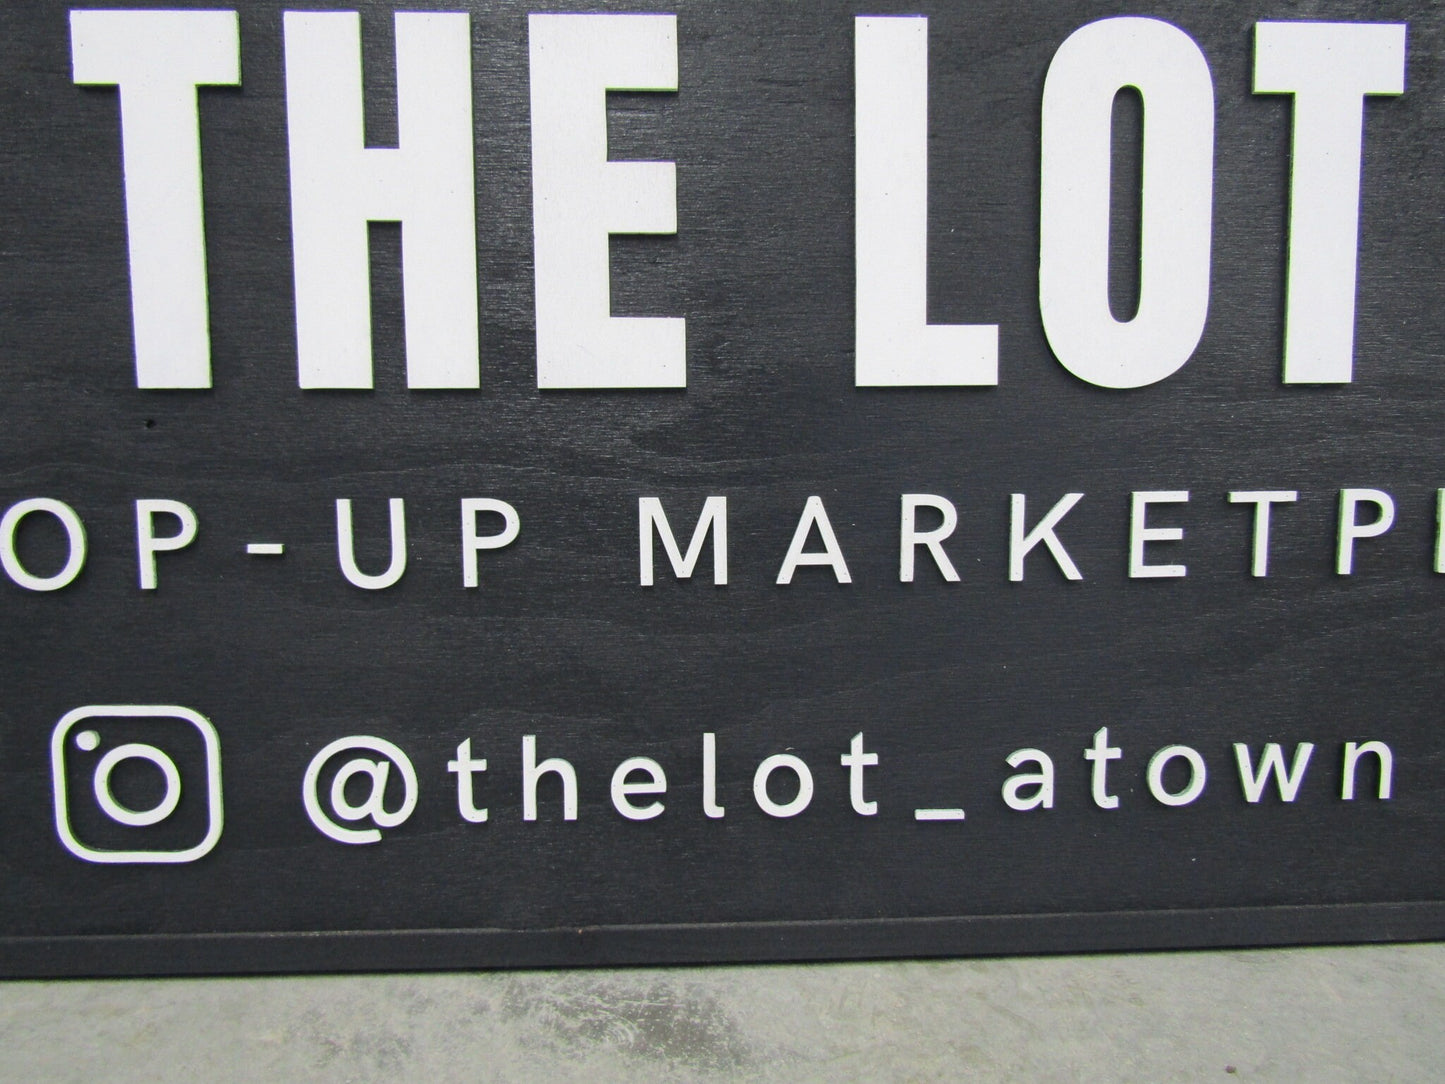 Custom Raised Pop Up Shop Marketplace Social Shoutout Personalized Text Image Business Sign 3D Rustic Primitive Black Oversized Large Sign